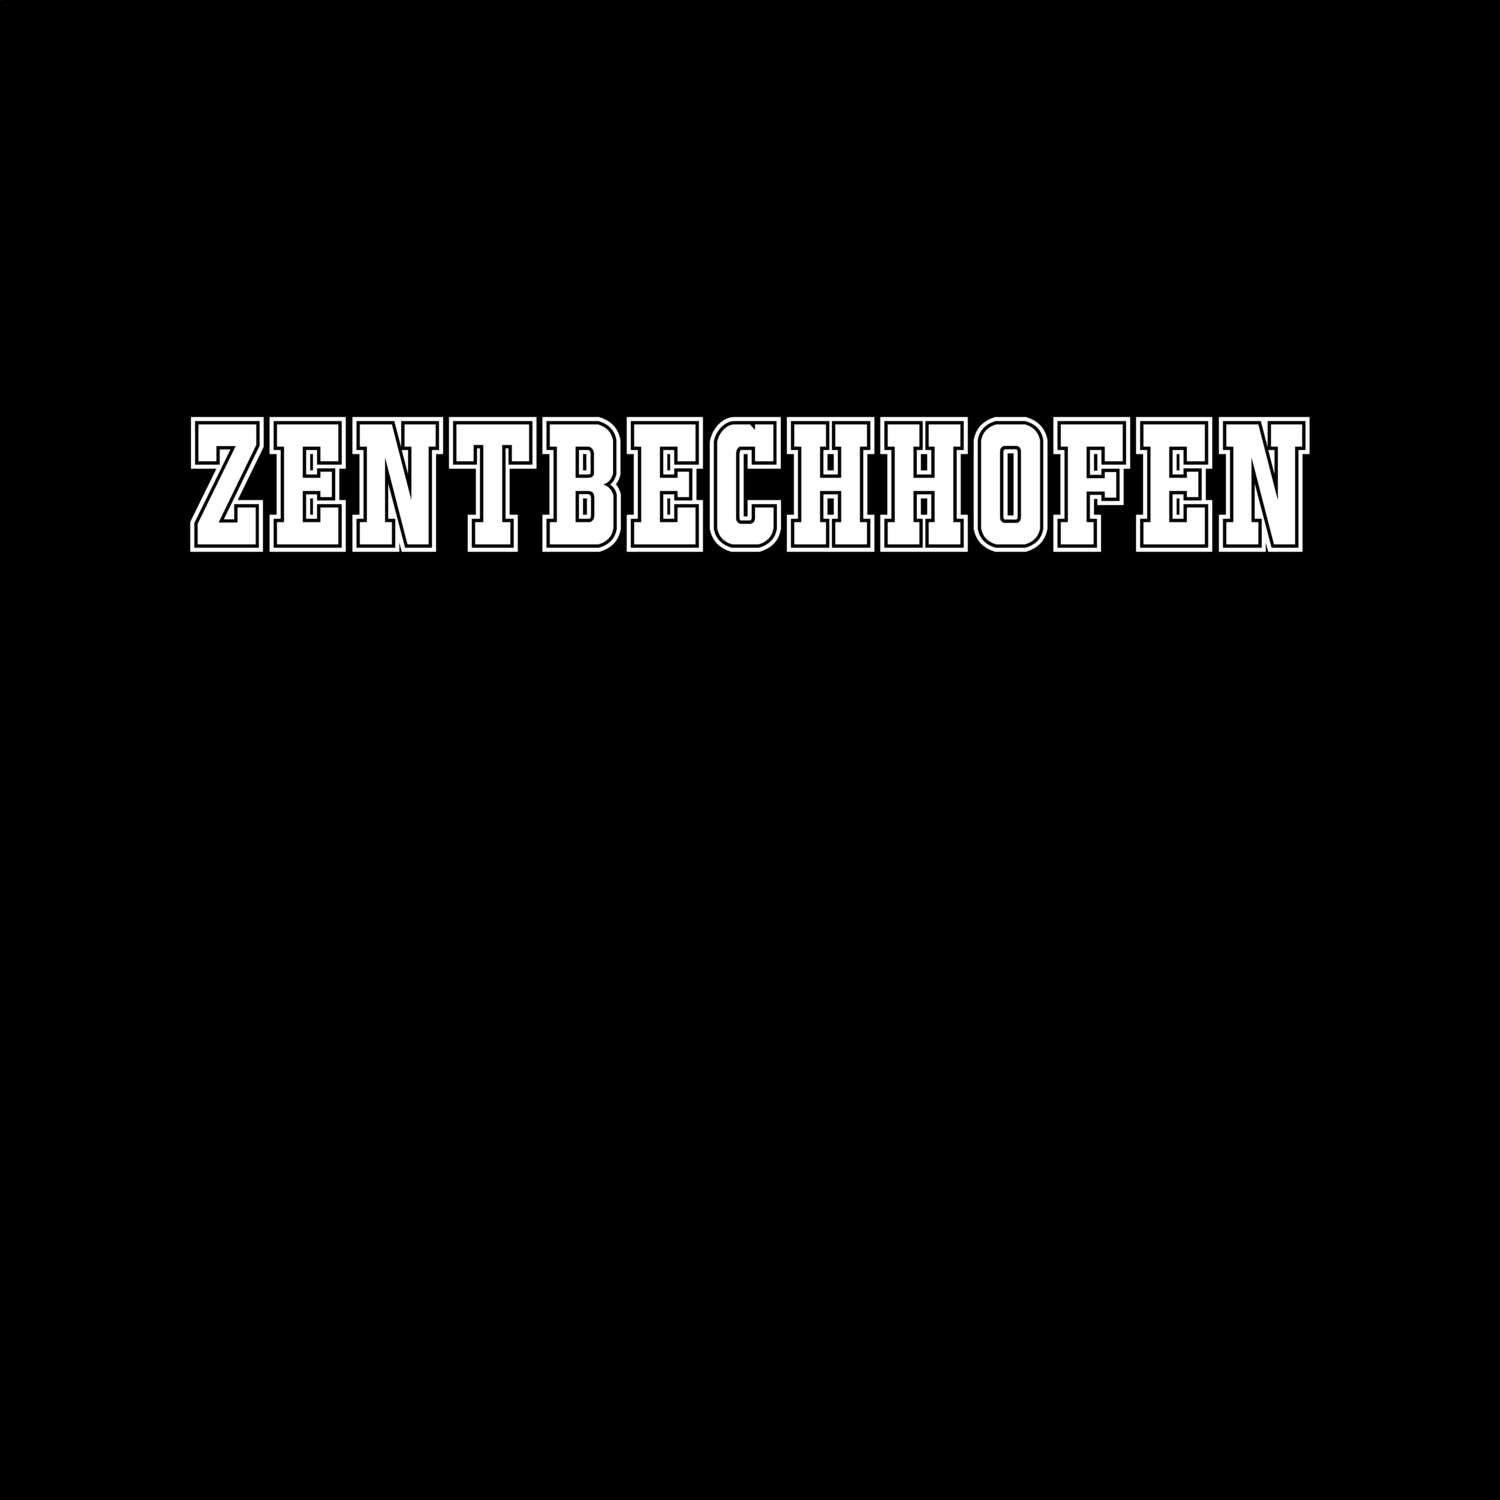 Zentbechhofen T-Shirt »Classic«